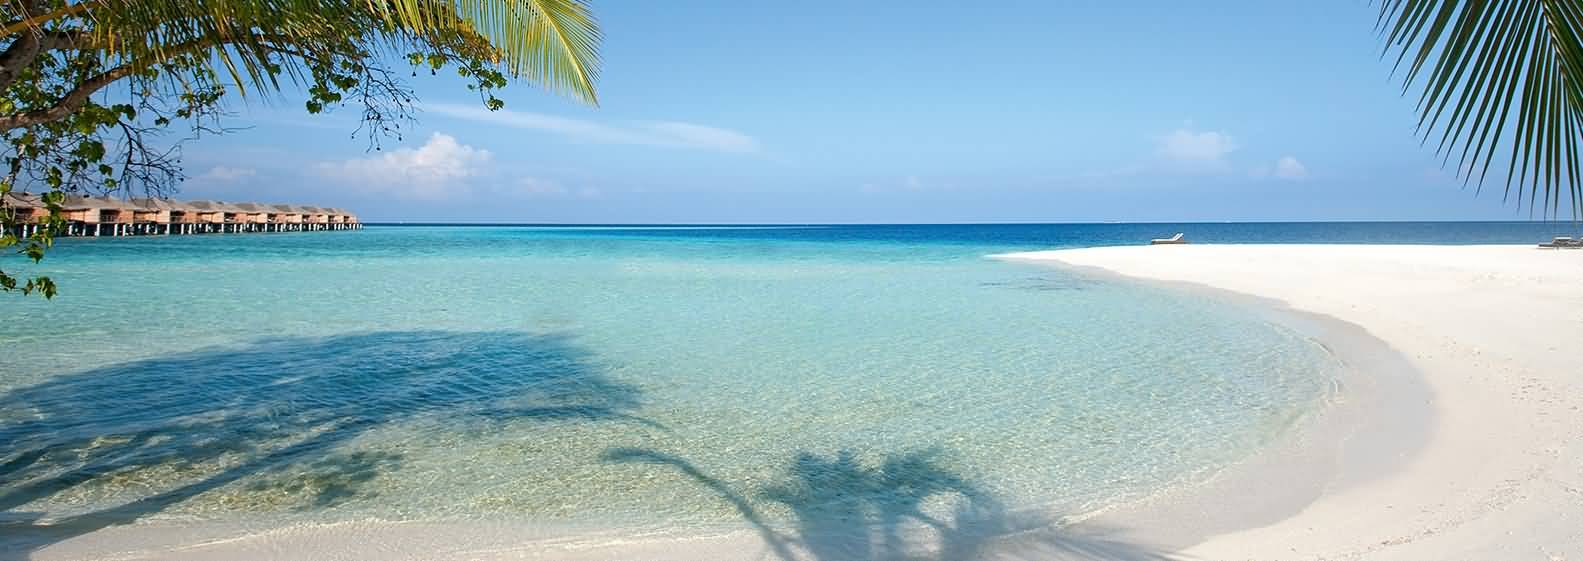 constance-moofushi-maldives-best-diving-site